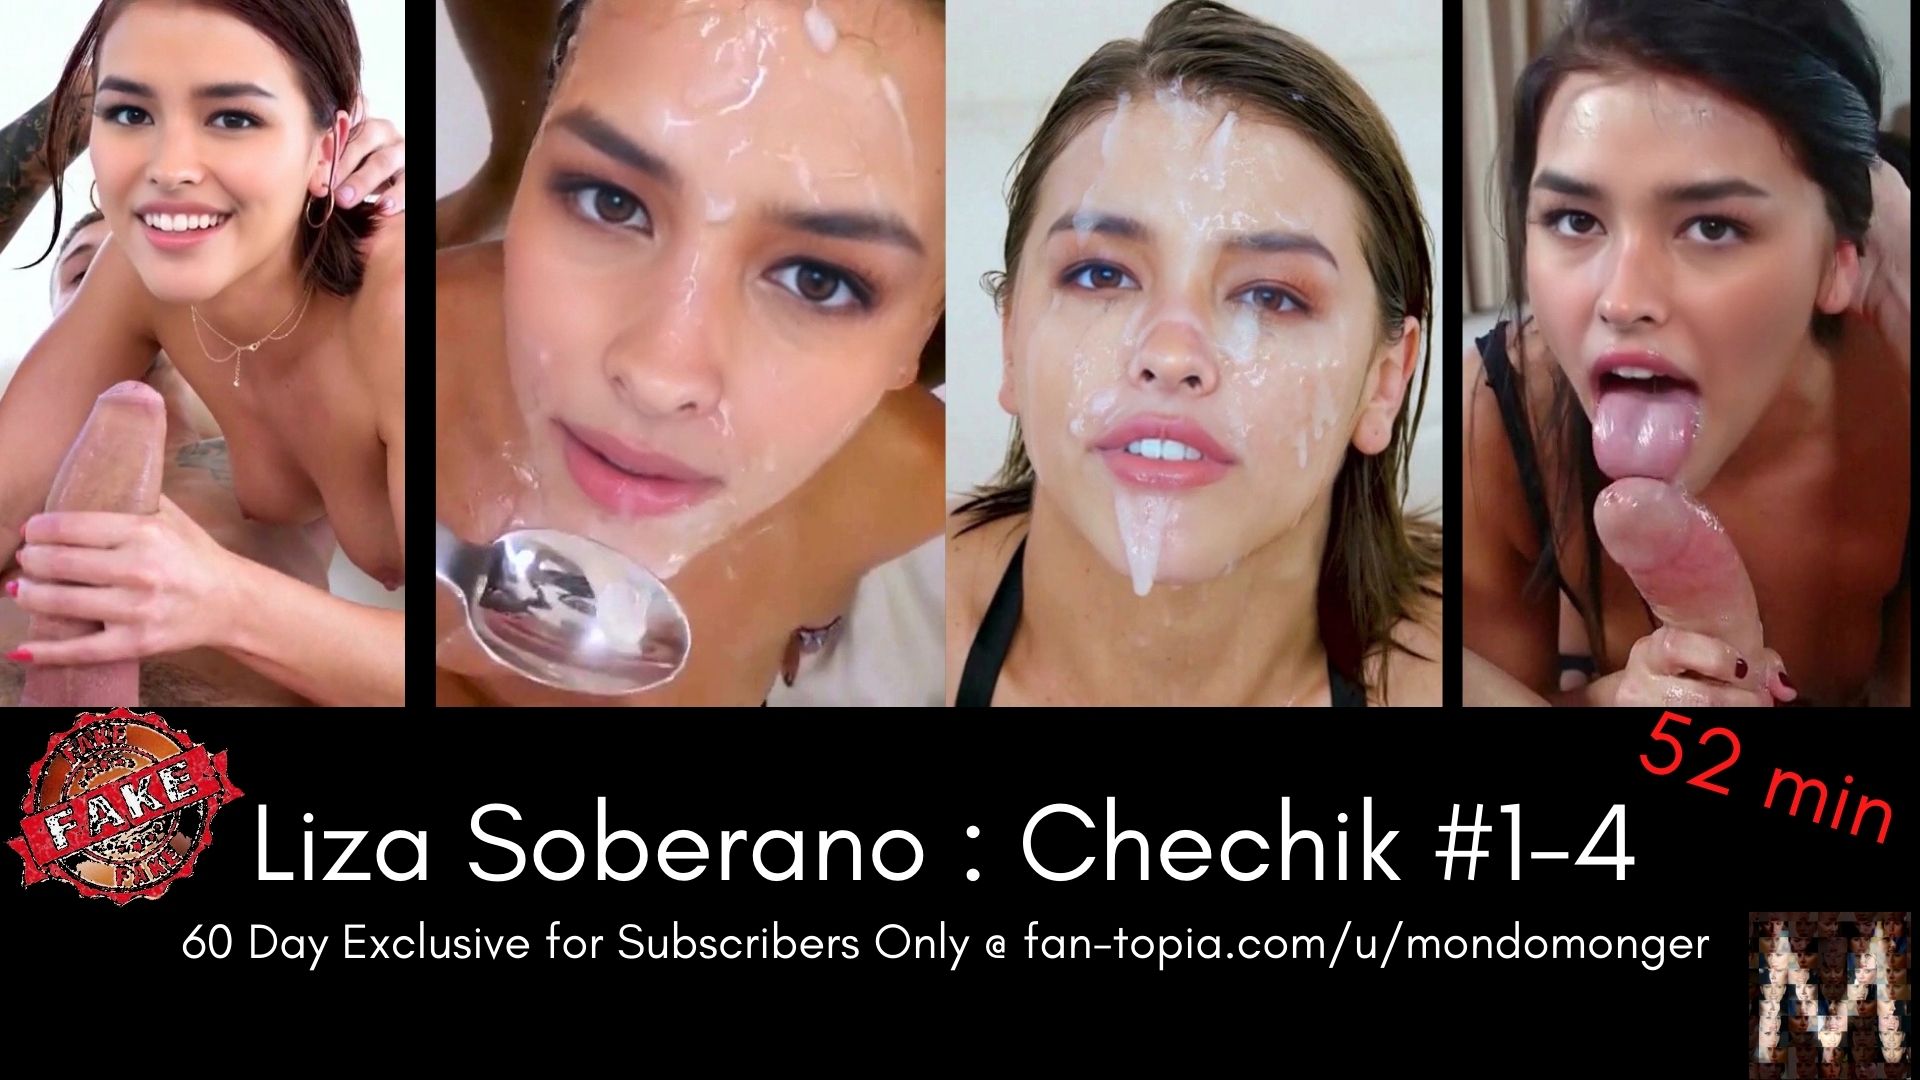 Liza Soberano:  52 min of Getting Nasty as Adriana Chechik #1-4 (Preview)